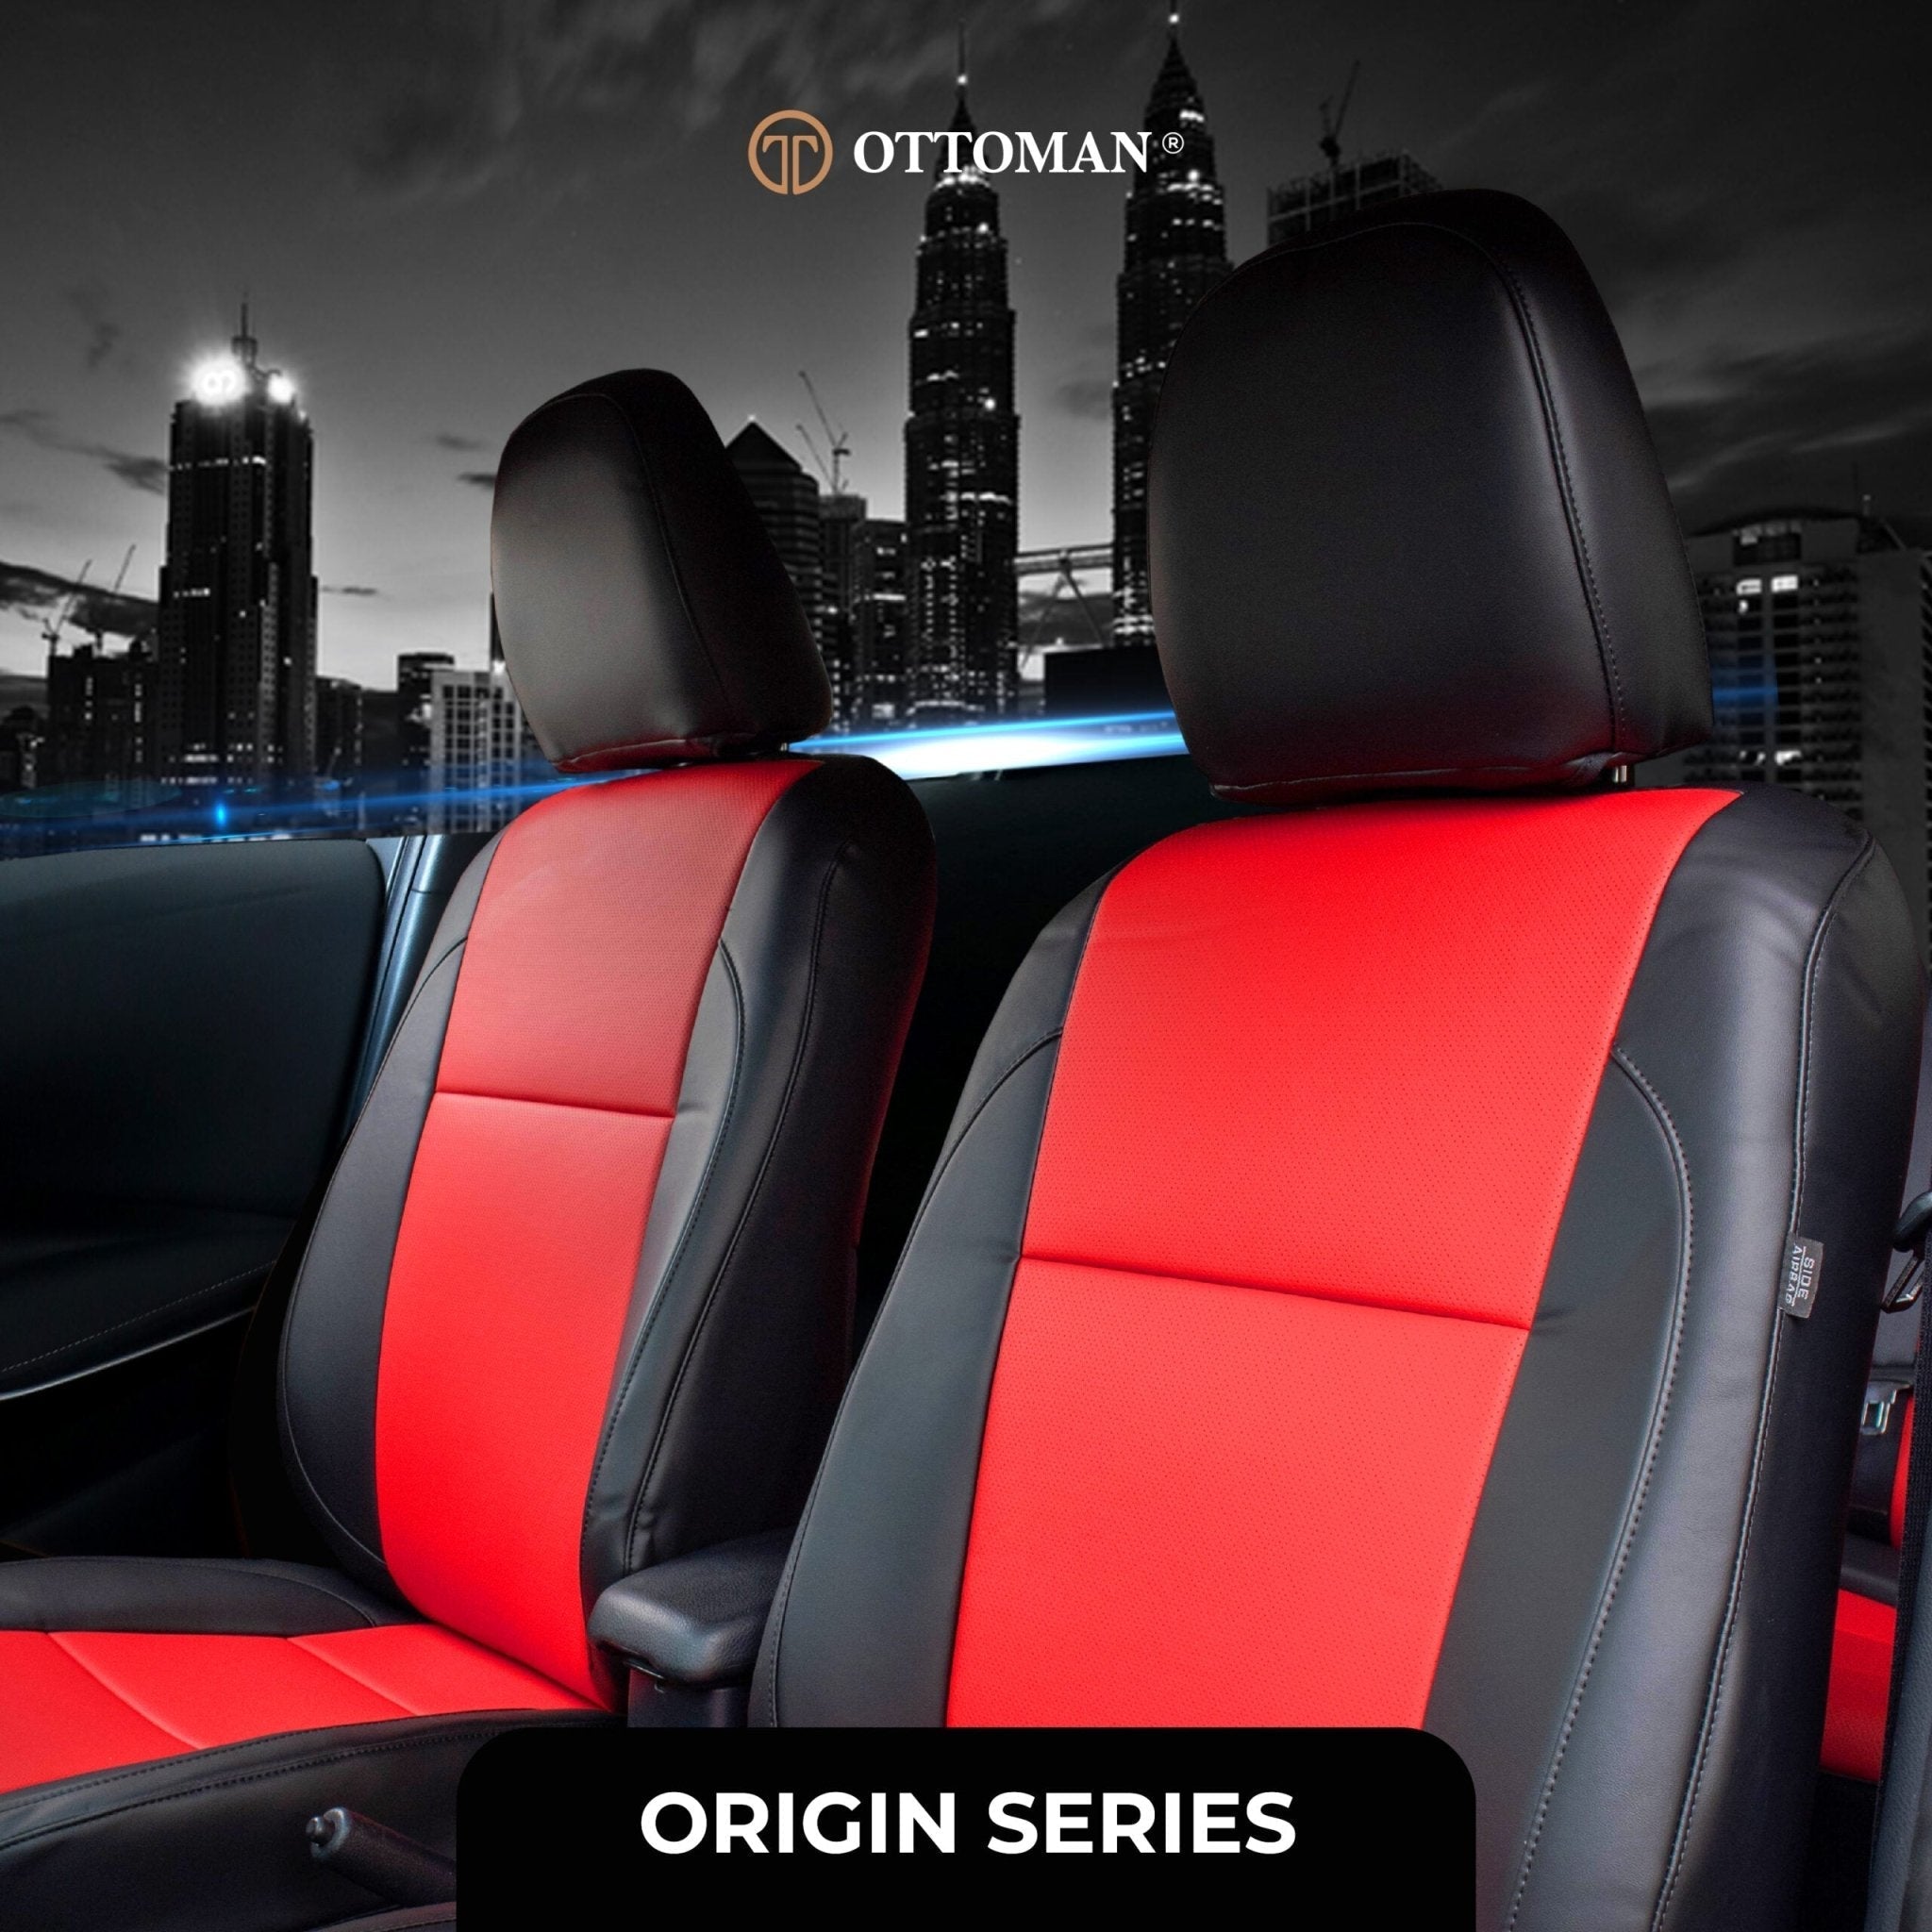 Peugeot 408 (2012-2015) Ottoman Seat Cover Seat Cover in Klang Selangor, Penang, Johor Bahru - Ottoman Car Mats